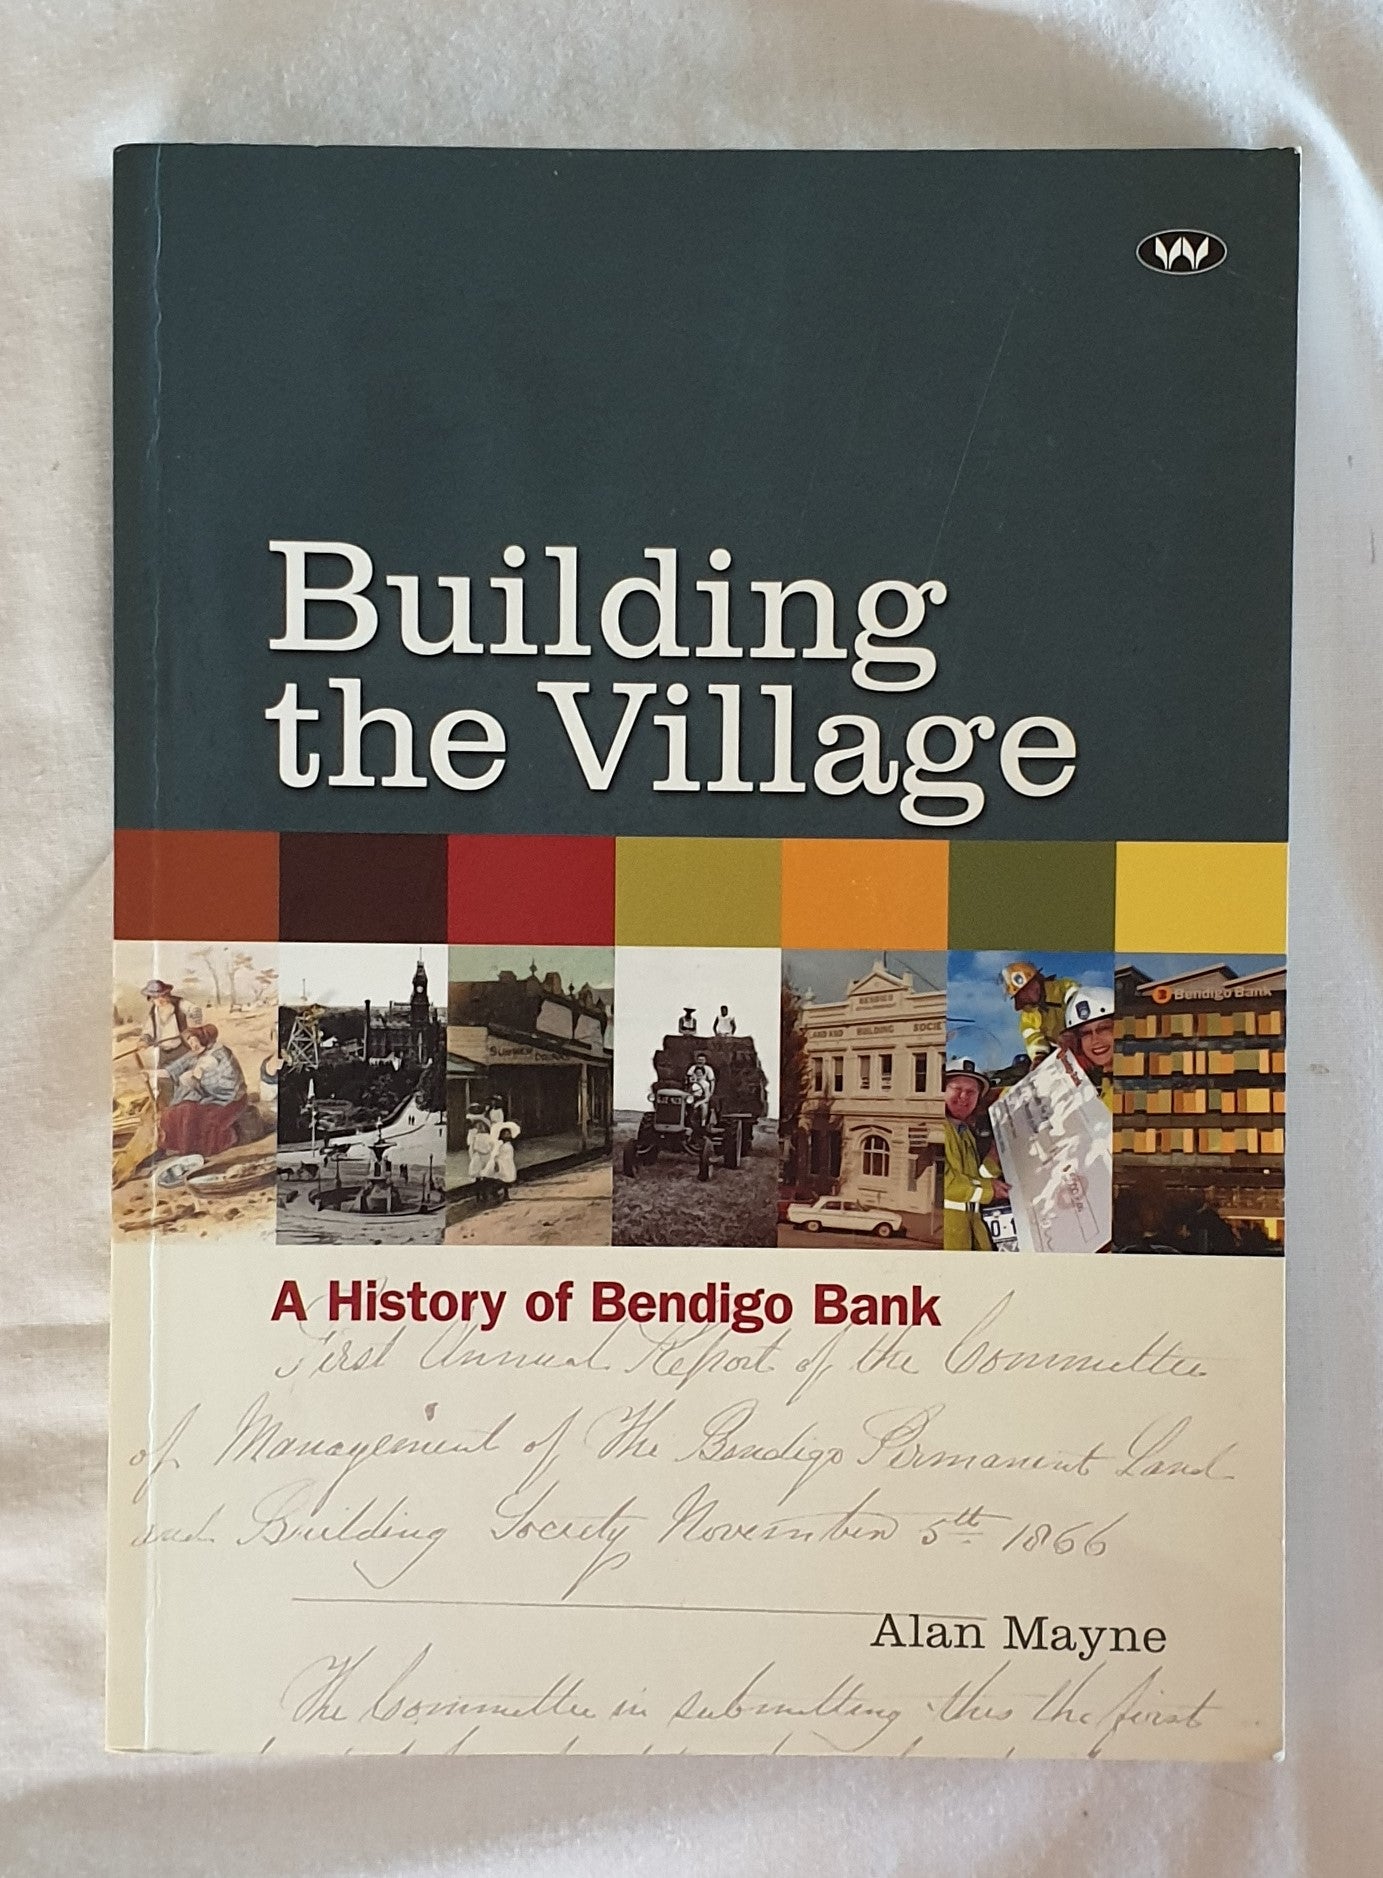 Building the Village by Alan Mayne